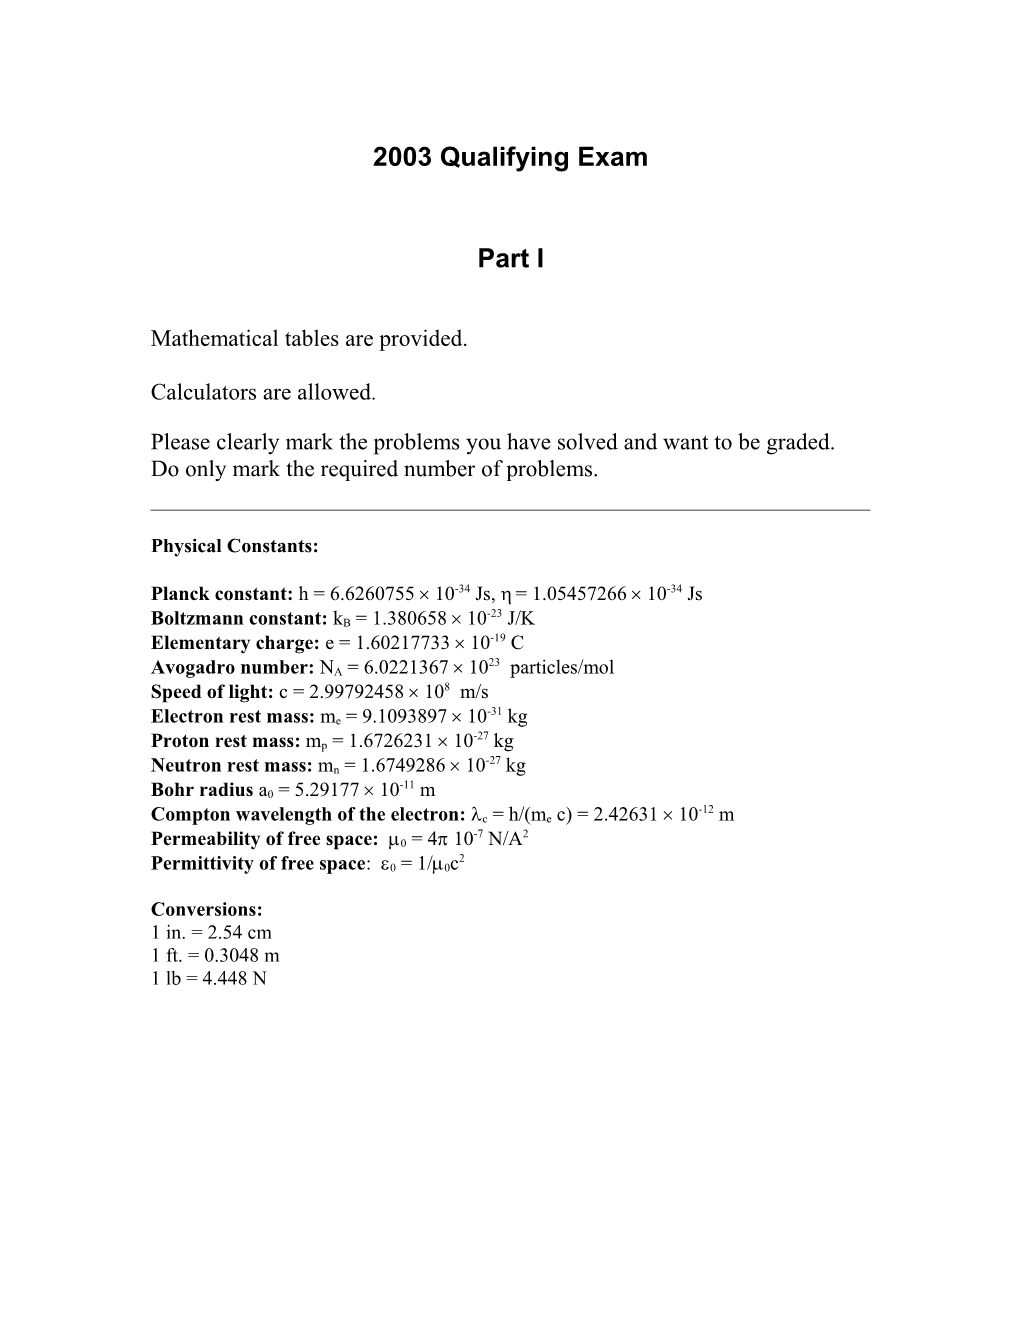 Fall 2003 Qualifying Exam